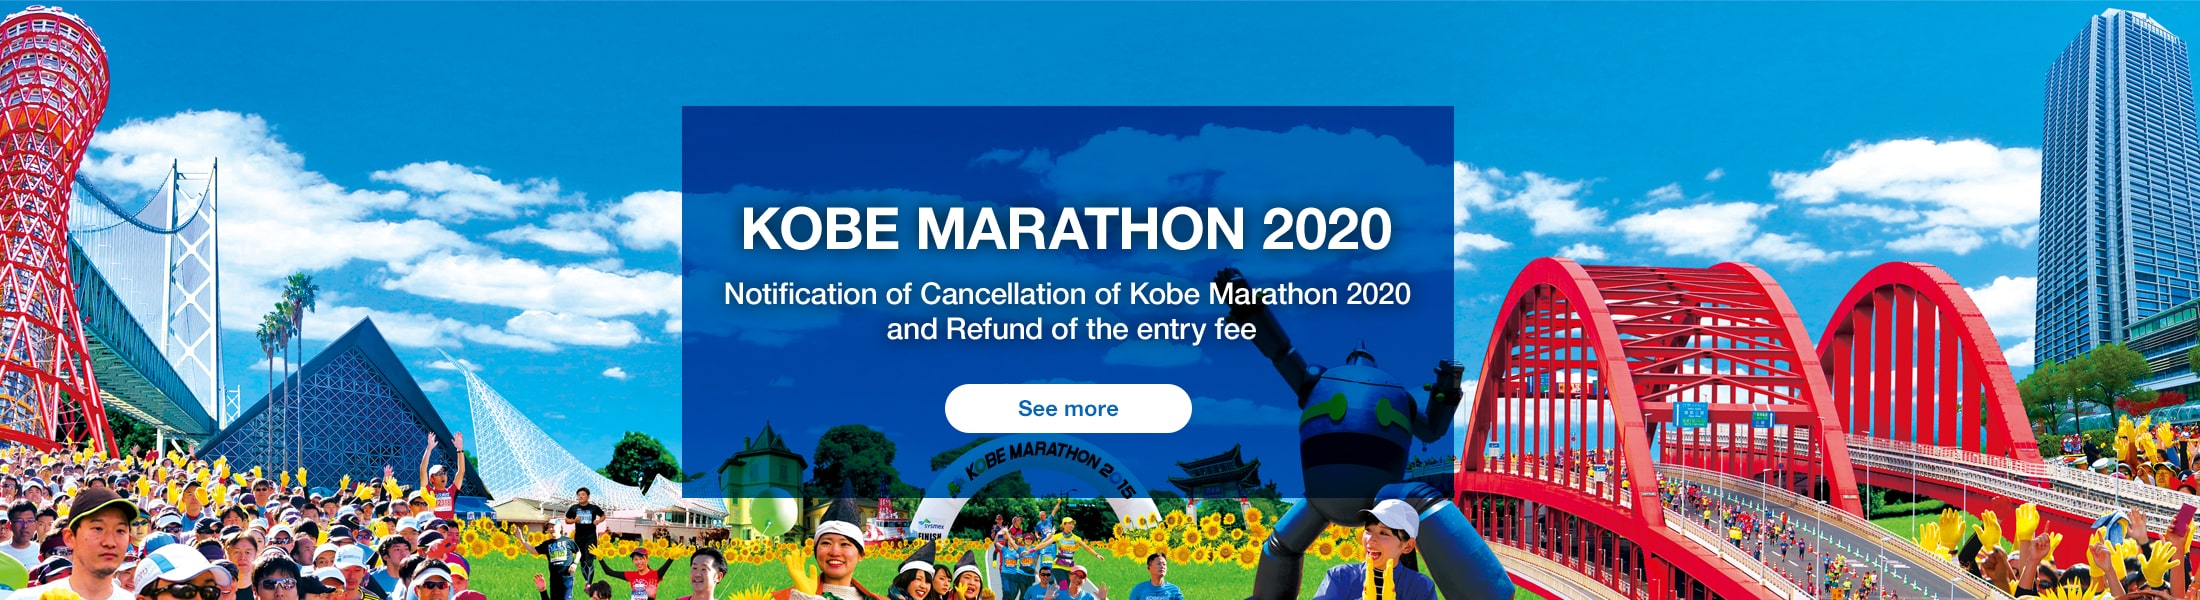 KOBE MARATHON 2020 Notification of Cancellation of Kobe Marathon 2020 and Refund of the entry fee See more